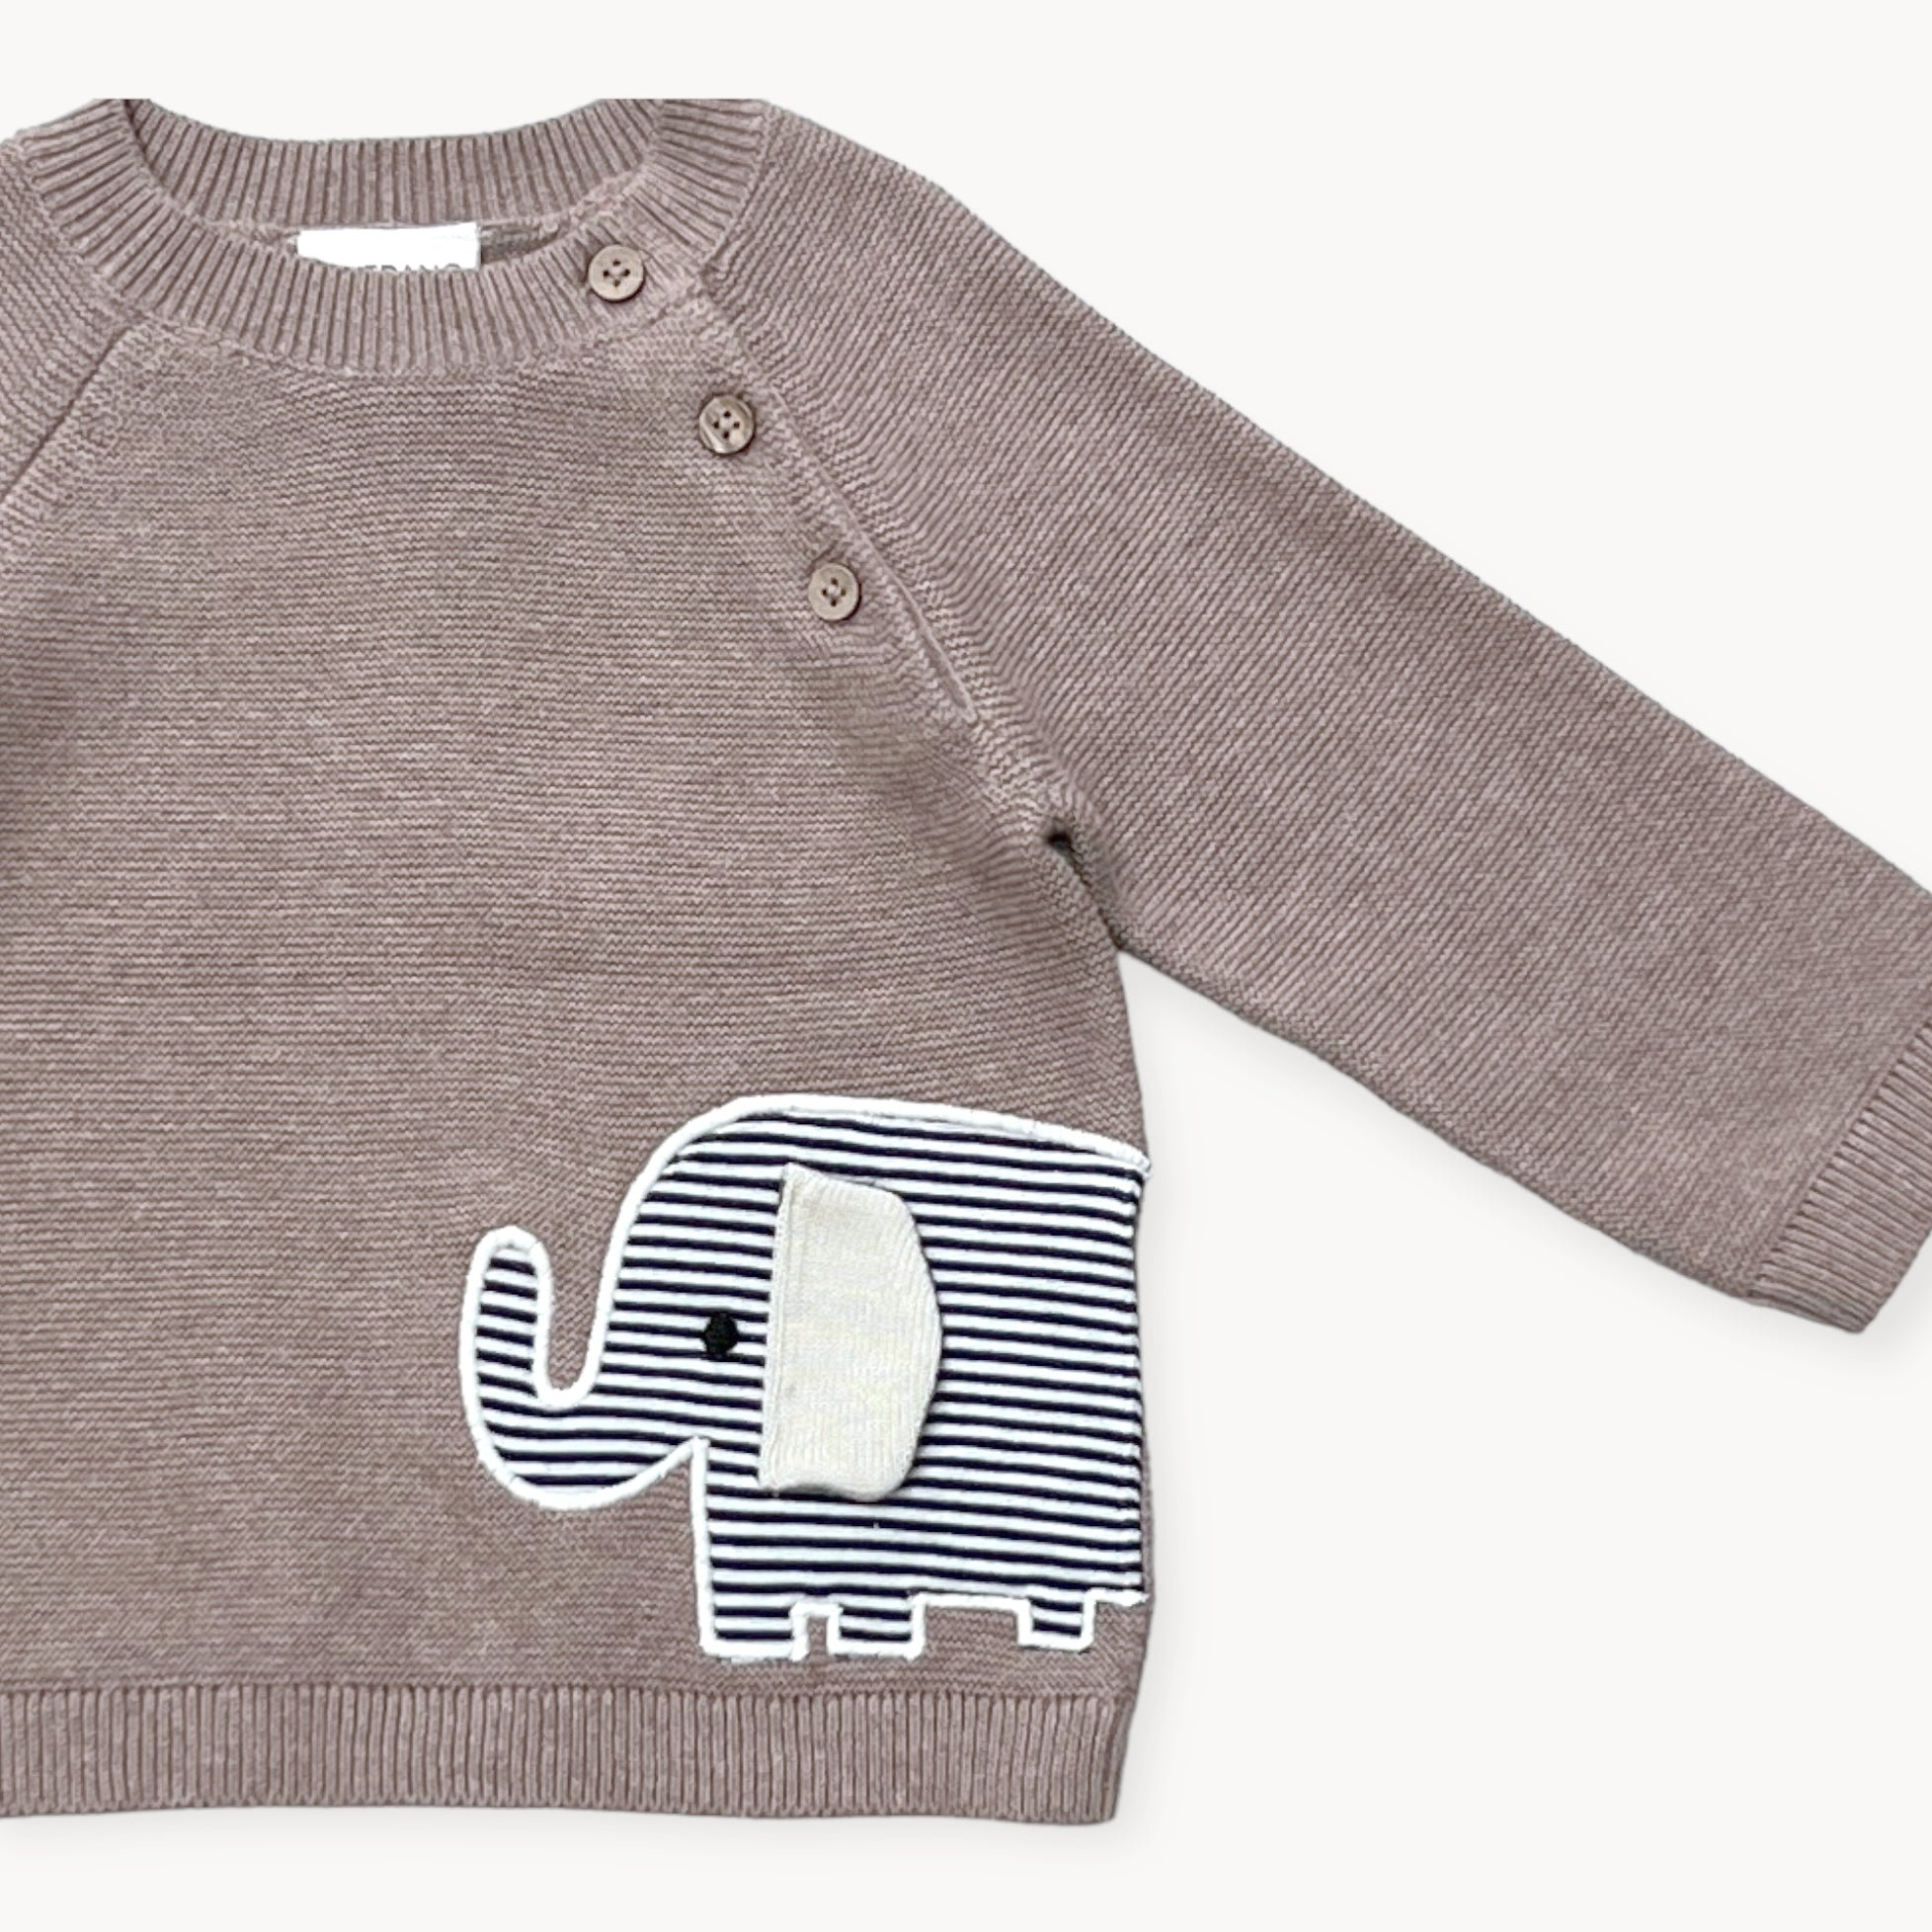 
  
  Elephant Appliqué Baby Pullover
  
